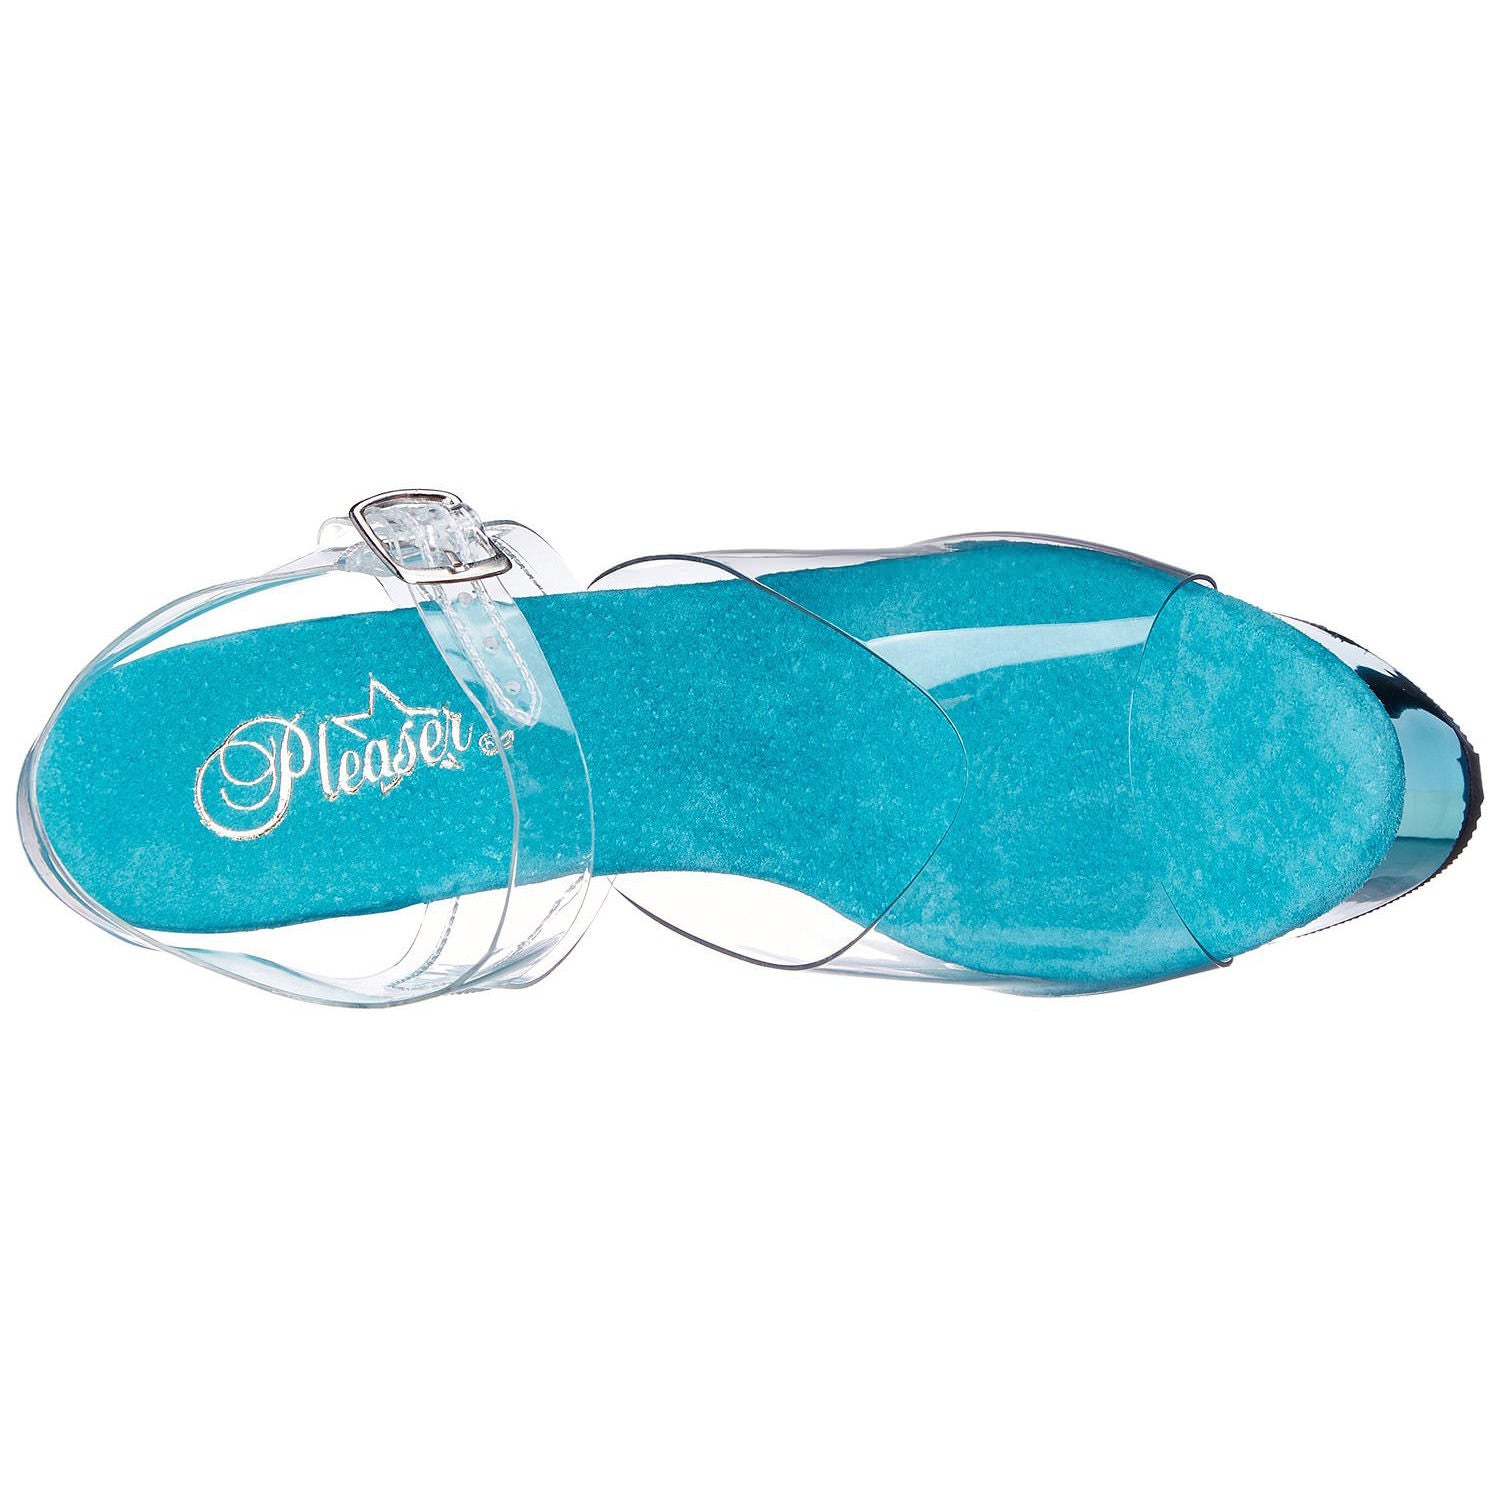 PLEASER SKY-308 Clear-Turquoise Chrome Ankle Strap Sandals - Shoecup.com - 7